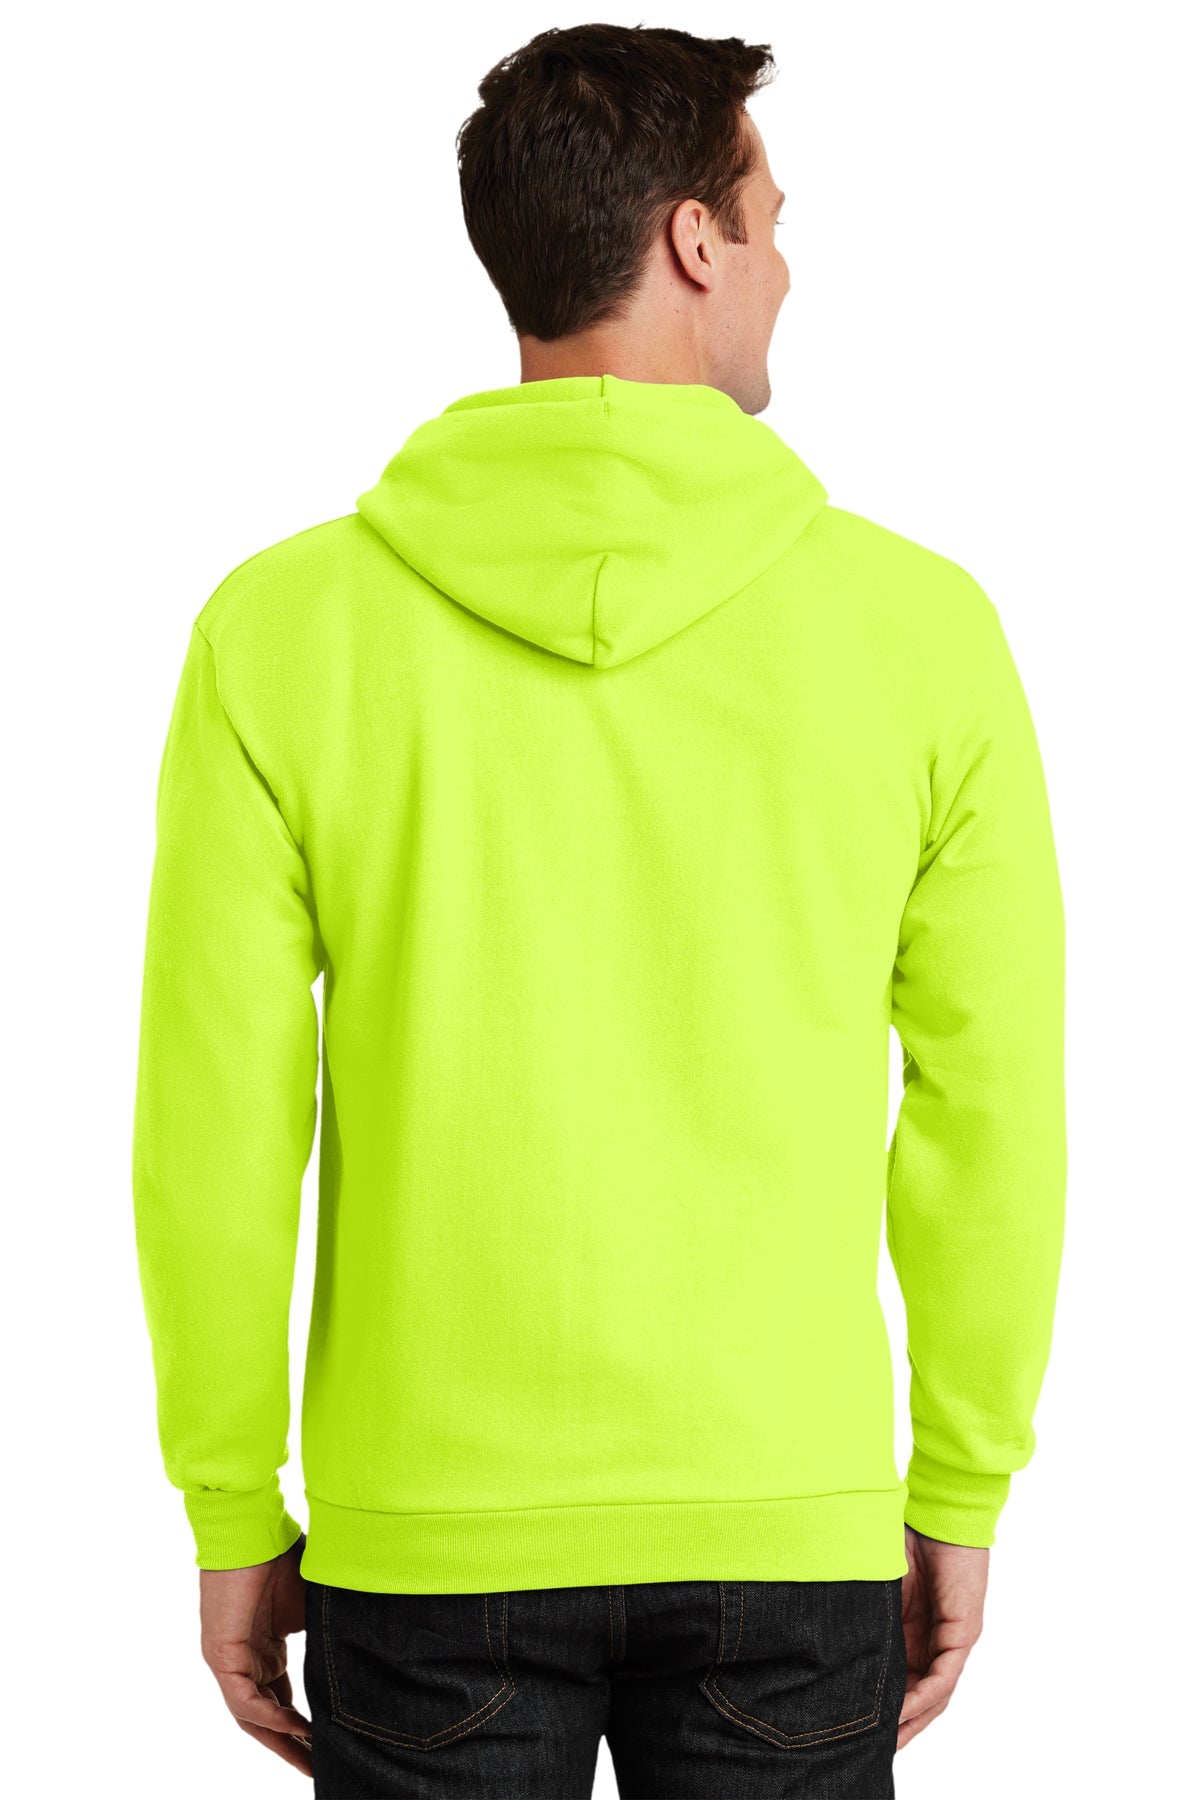 Port & Company Tall Essential Fleece Zip Custom Hoodies, Safety Green